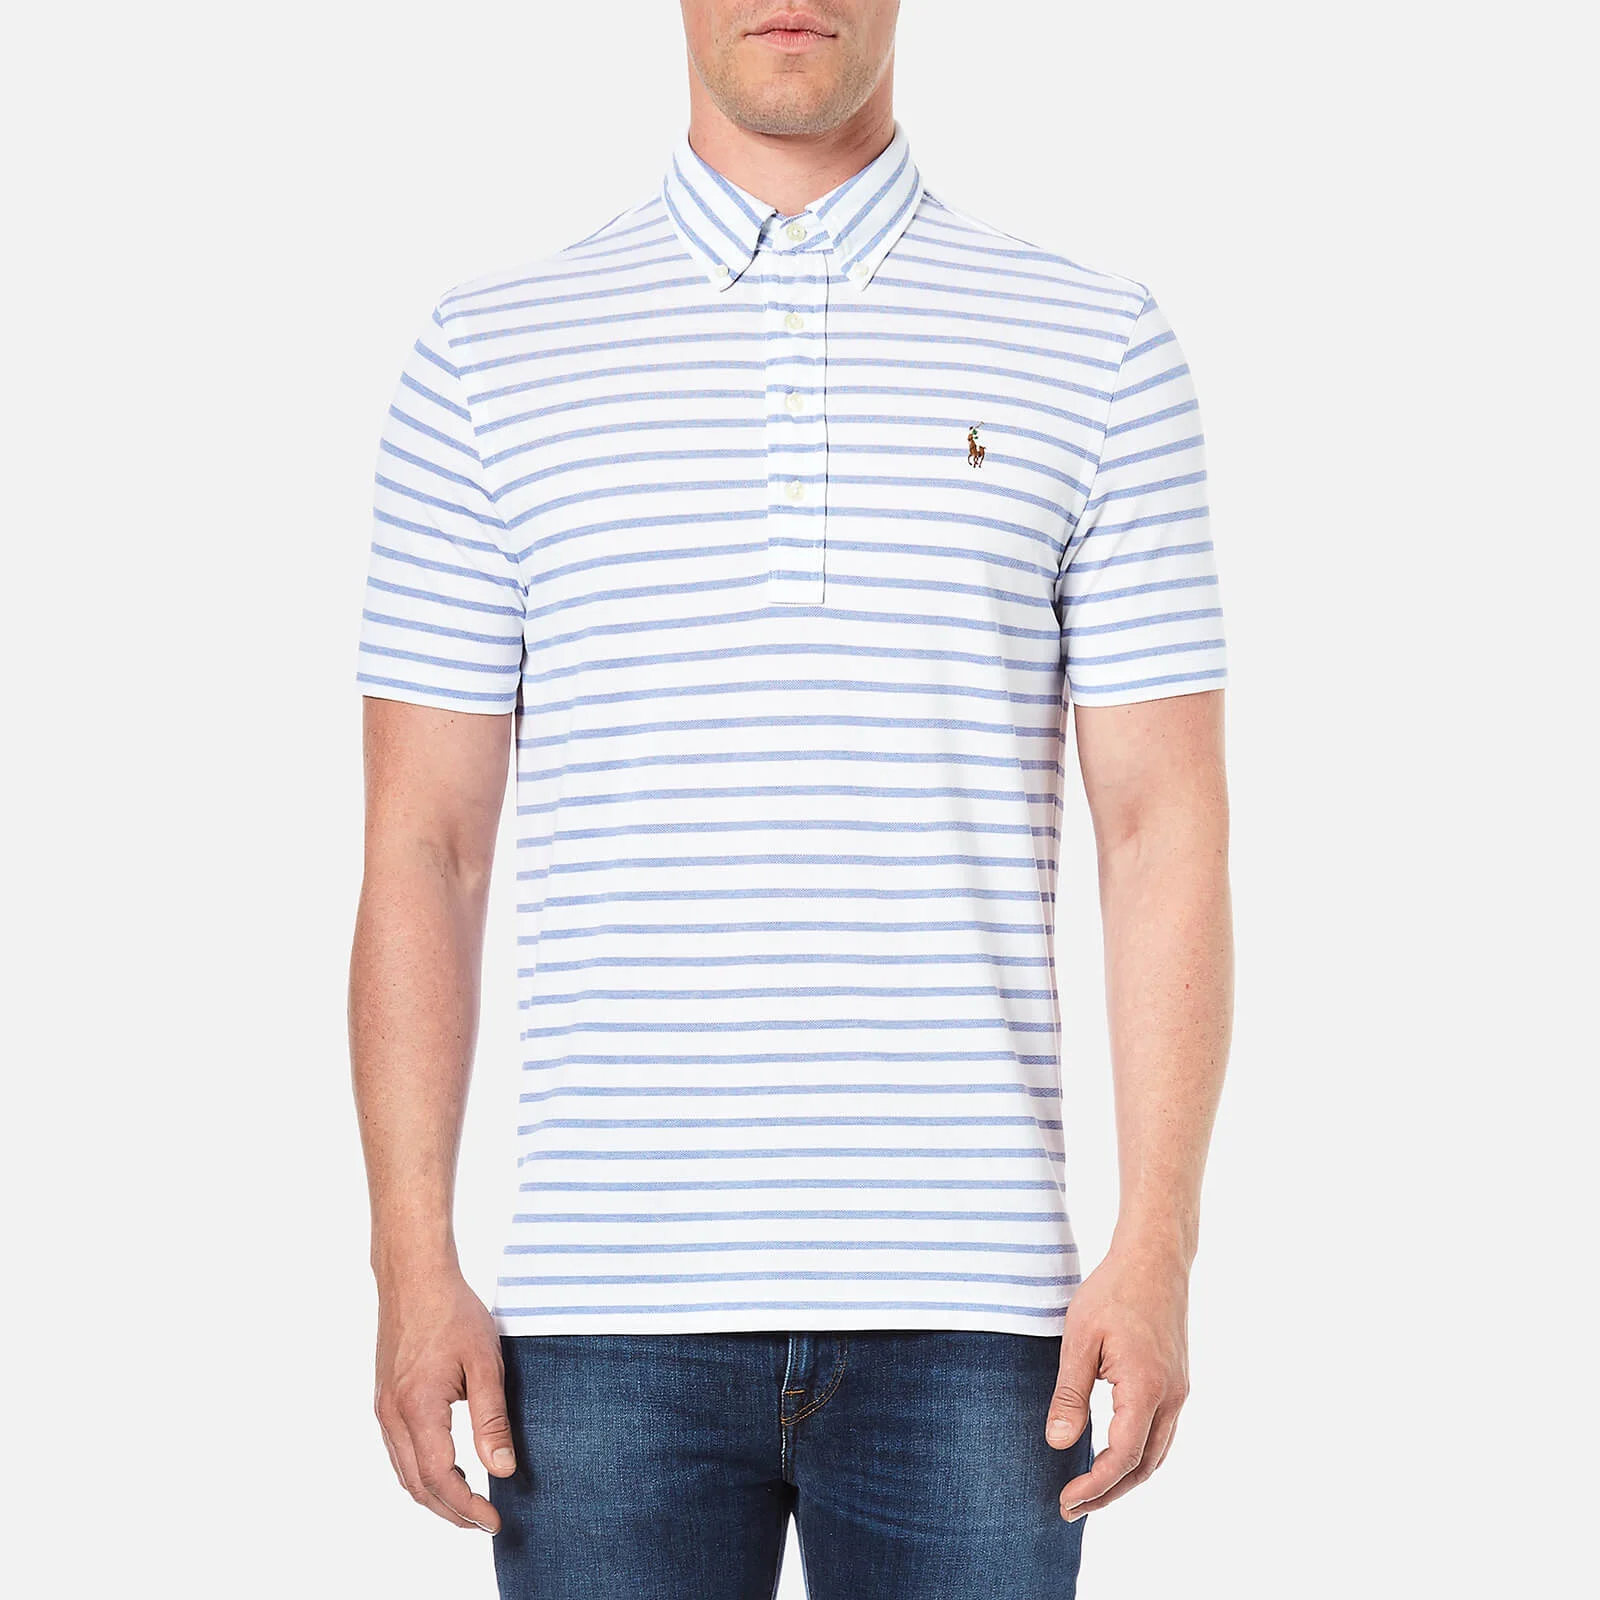 Polo Ralph Lauren Men's Stripe Cotton Polo Shirt - White/Indigo Image 1